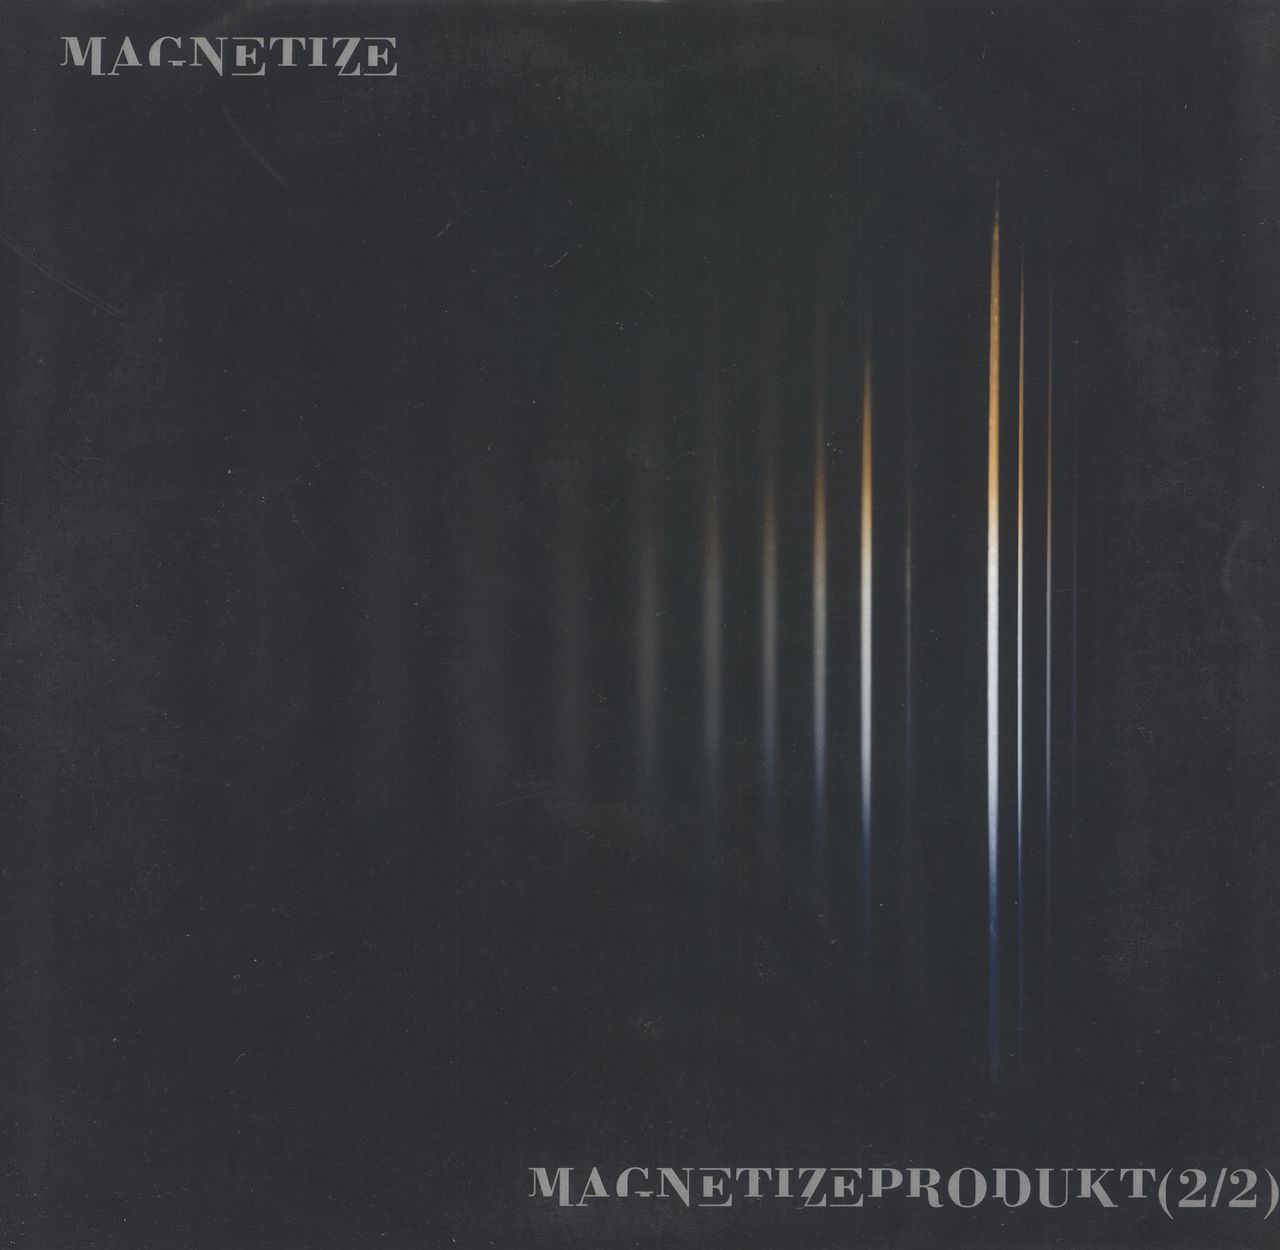 Magnetize MagnetizeProdukt 2/2 - Clear Vinyl UK 10" vinyl single (10 inch record) CV201116